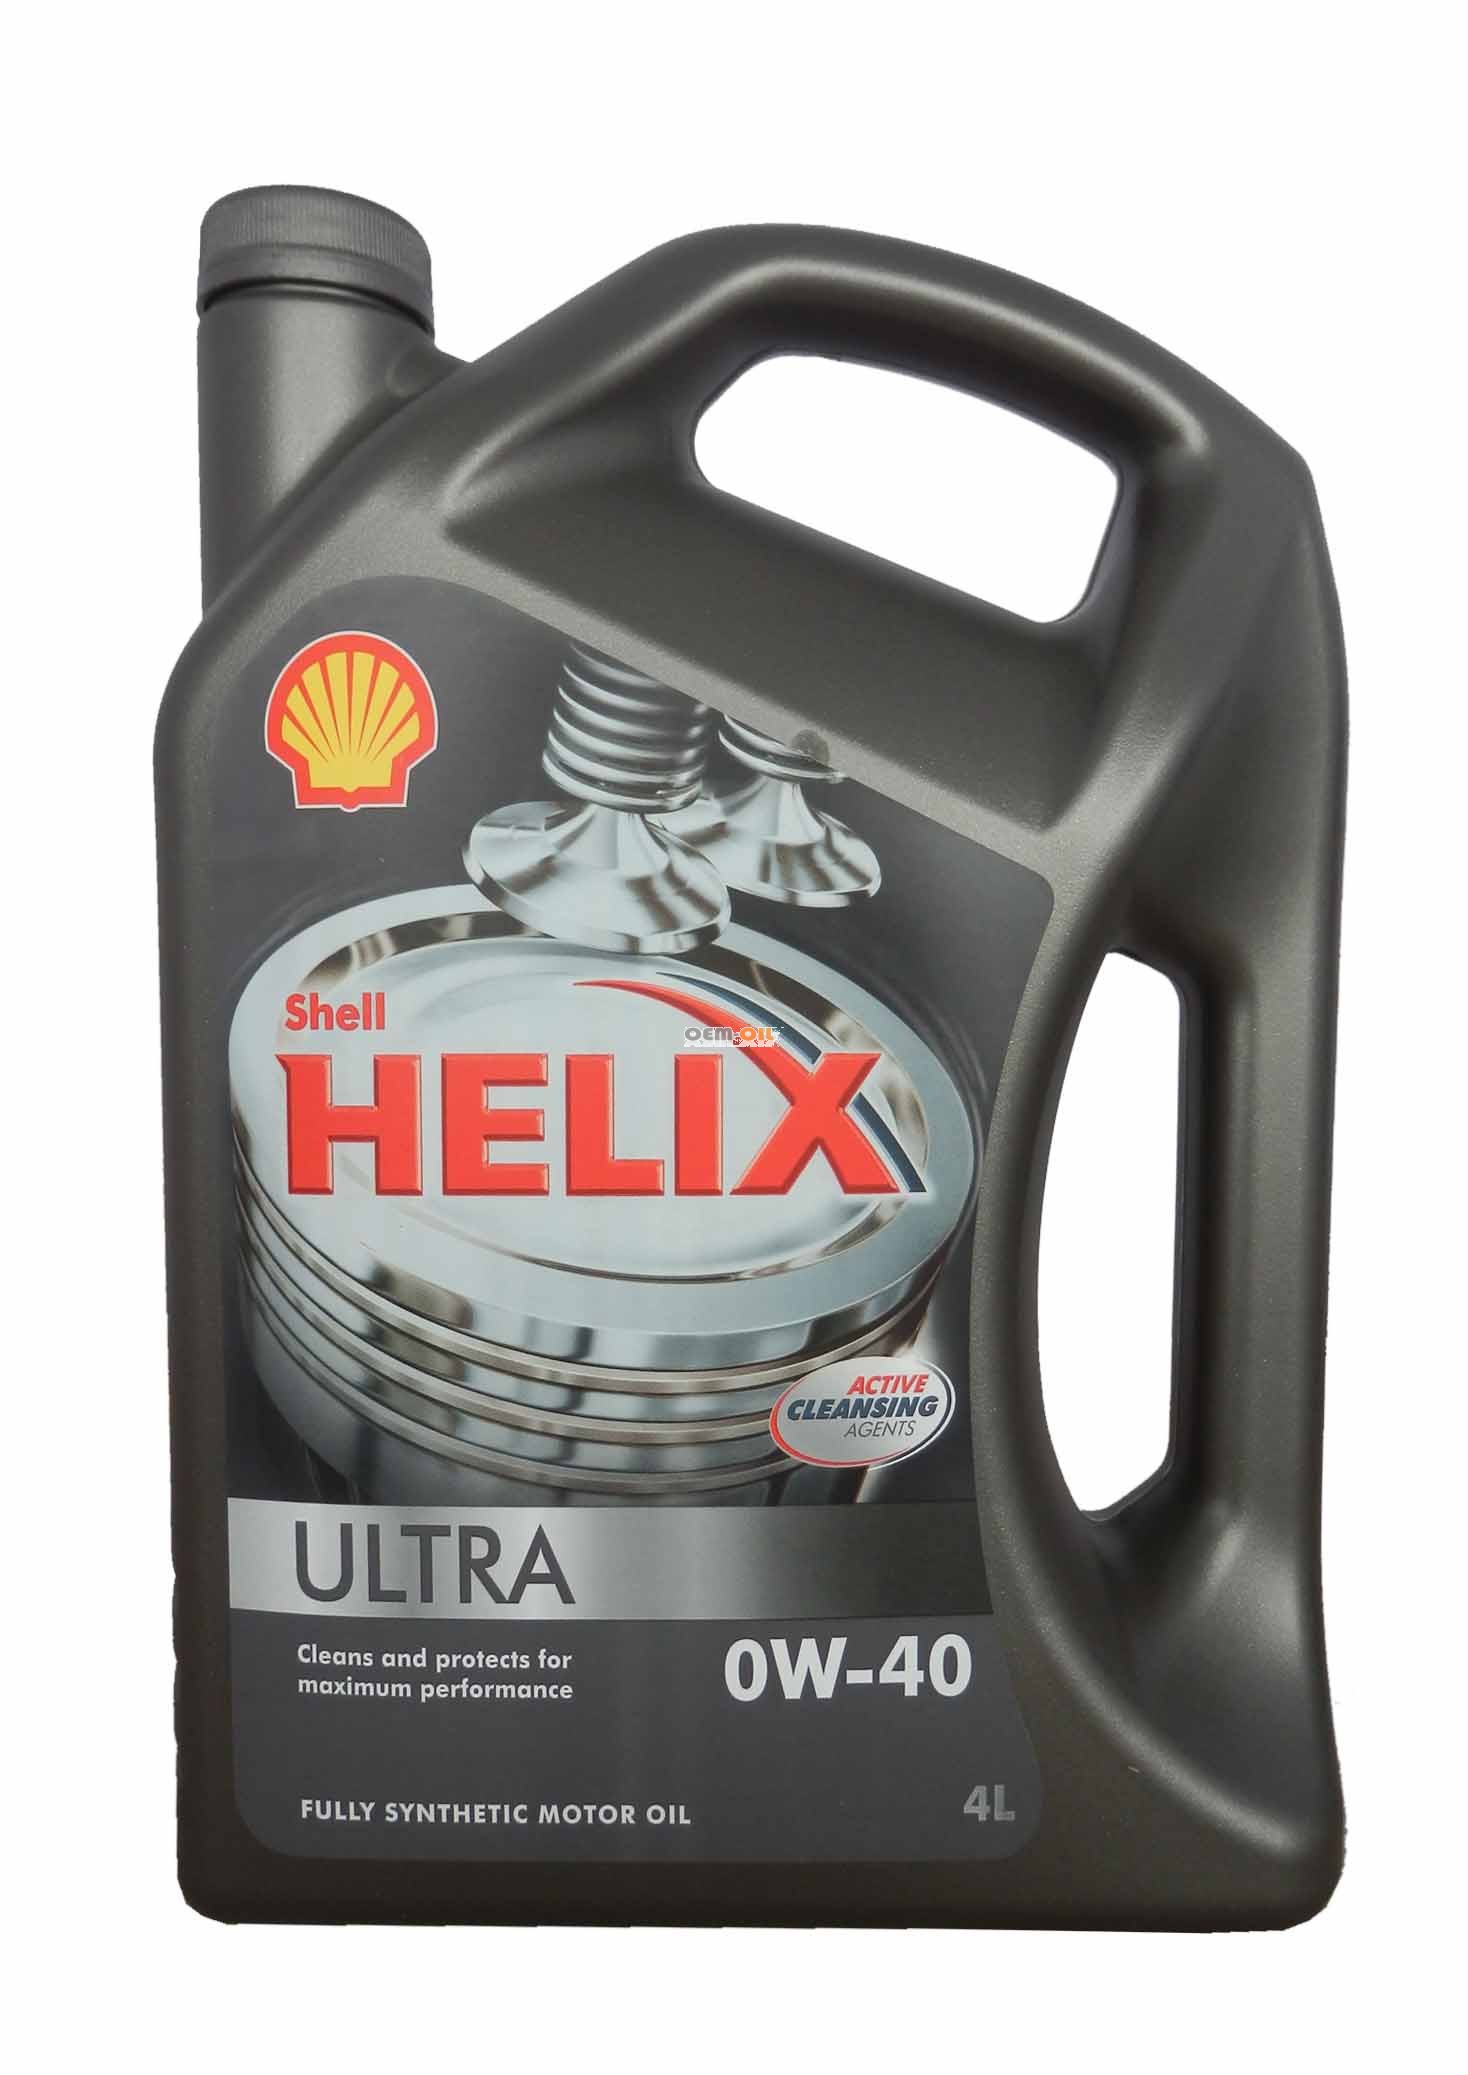 Shell / Helix Ultra